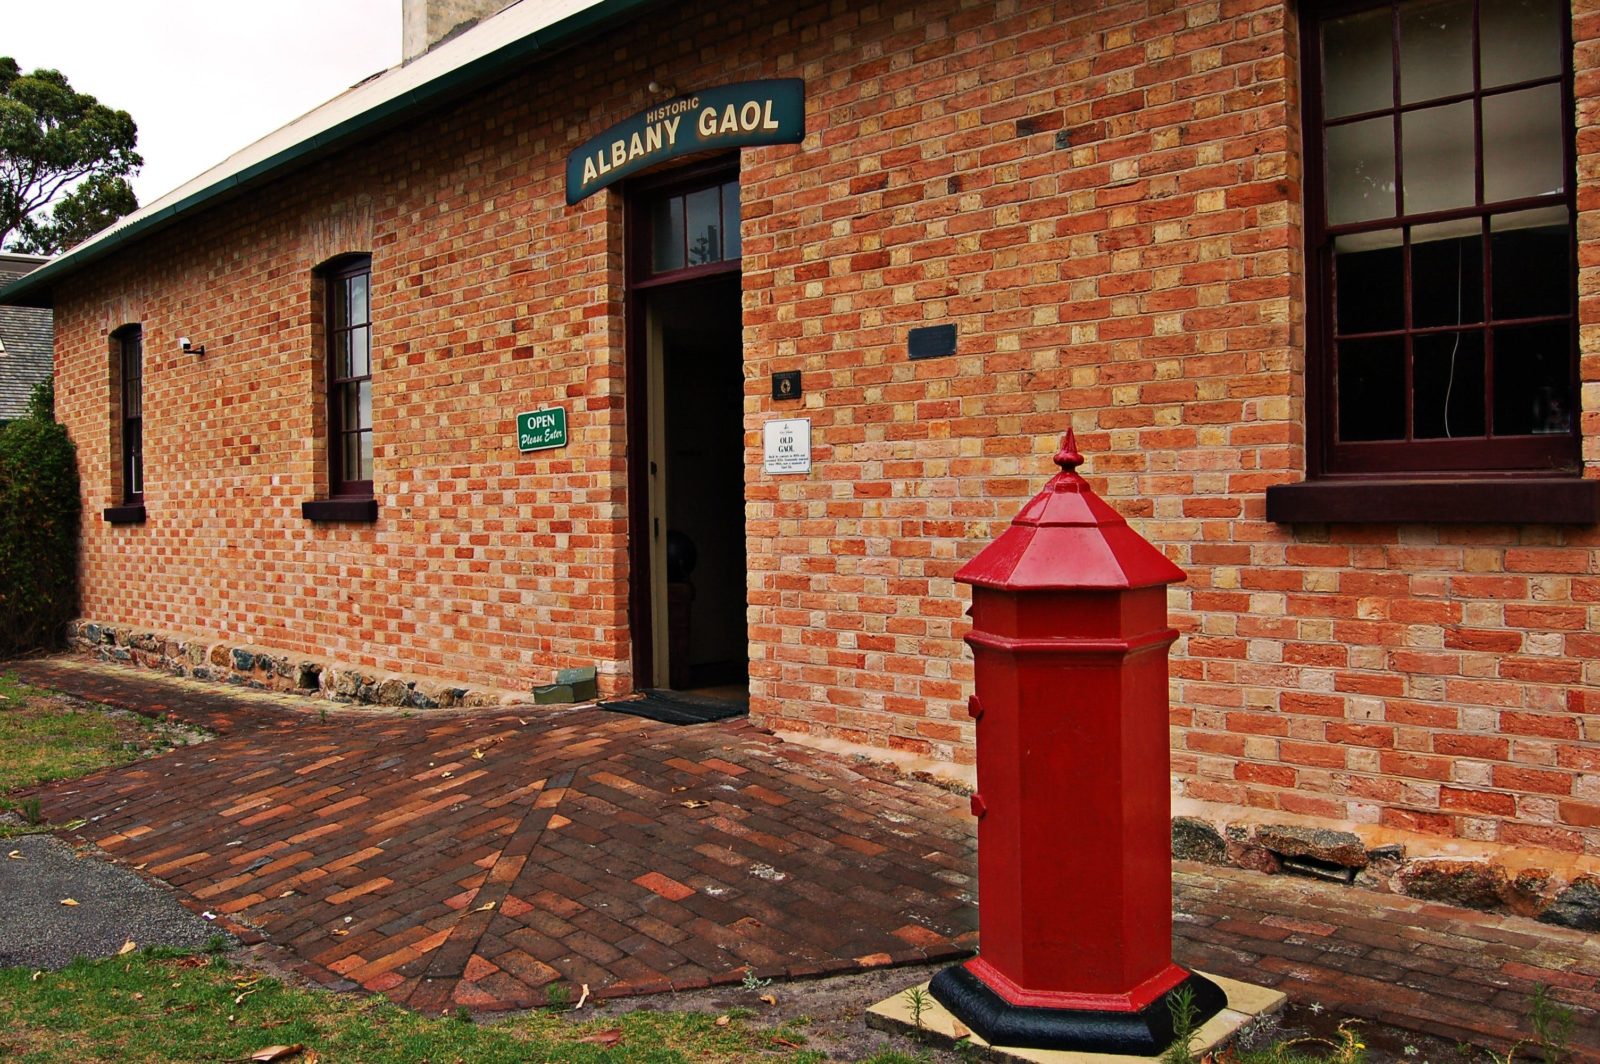 Albany Old Gaol Museum, Albany, Western Australia